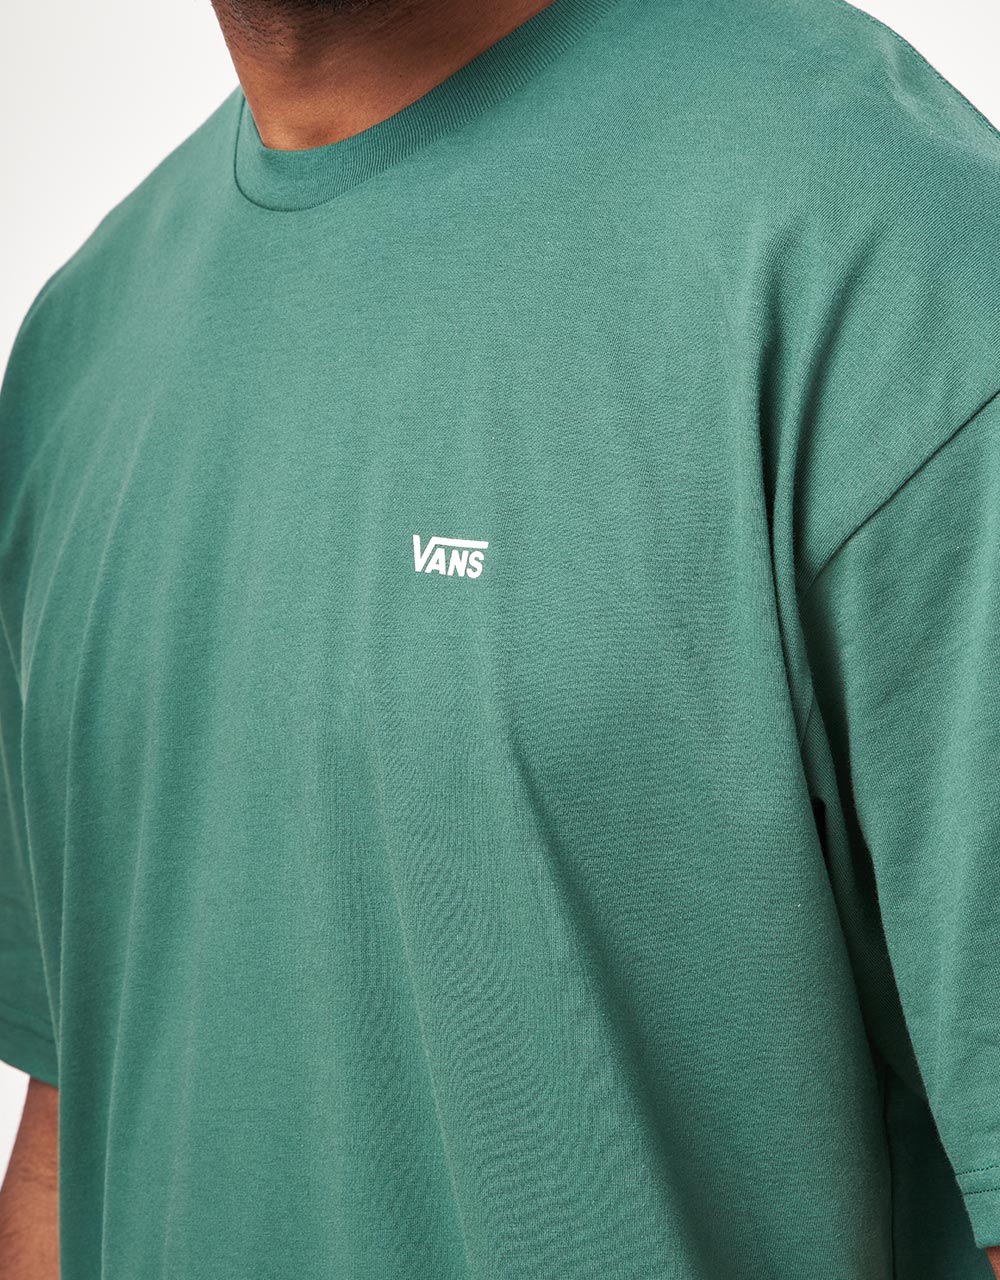 Vans Left Chest Logo T-Shirt - Bistro Green